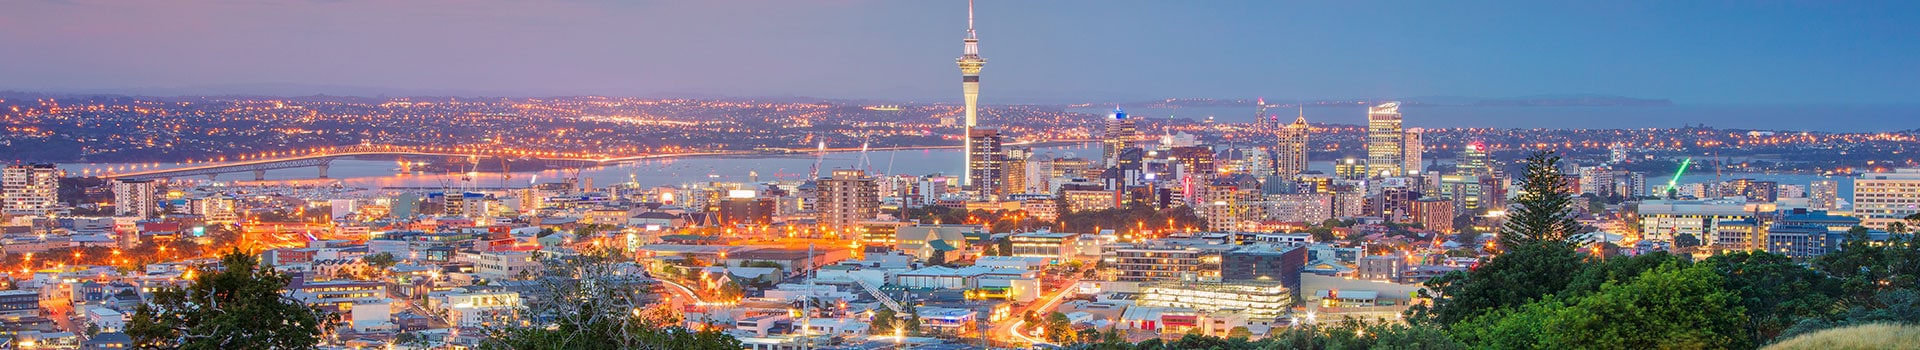 Sao paulo - Auckland